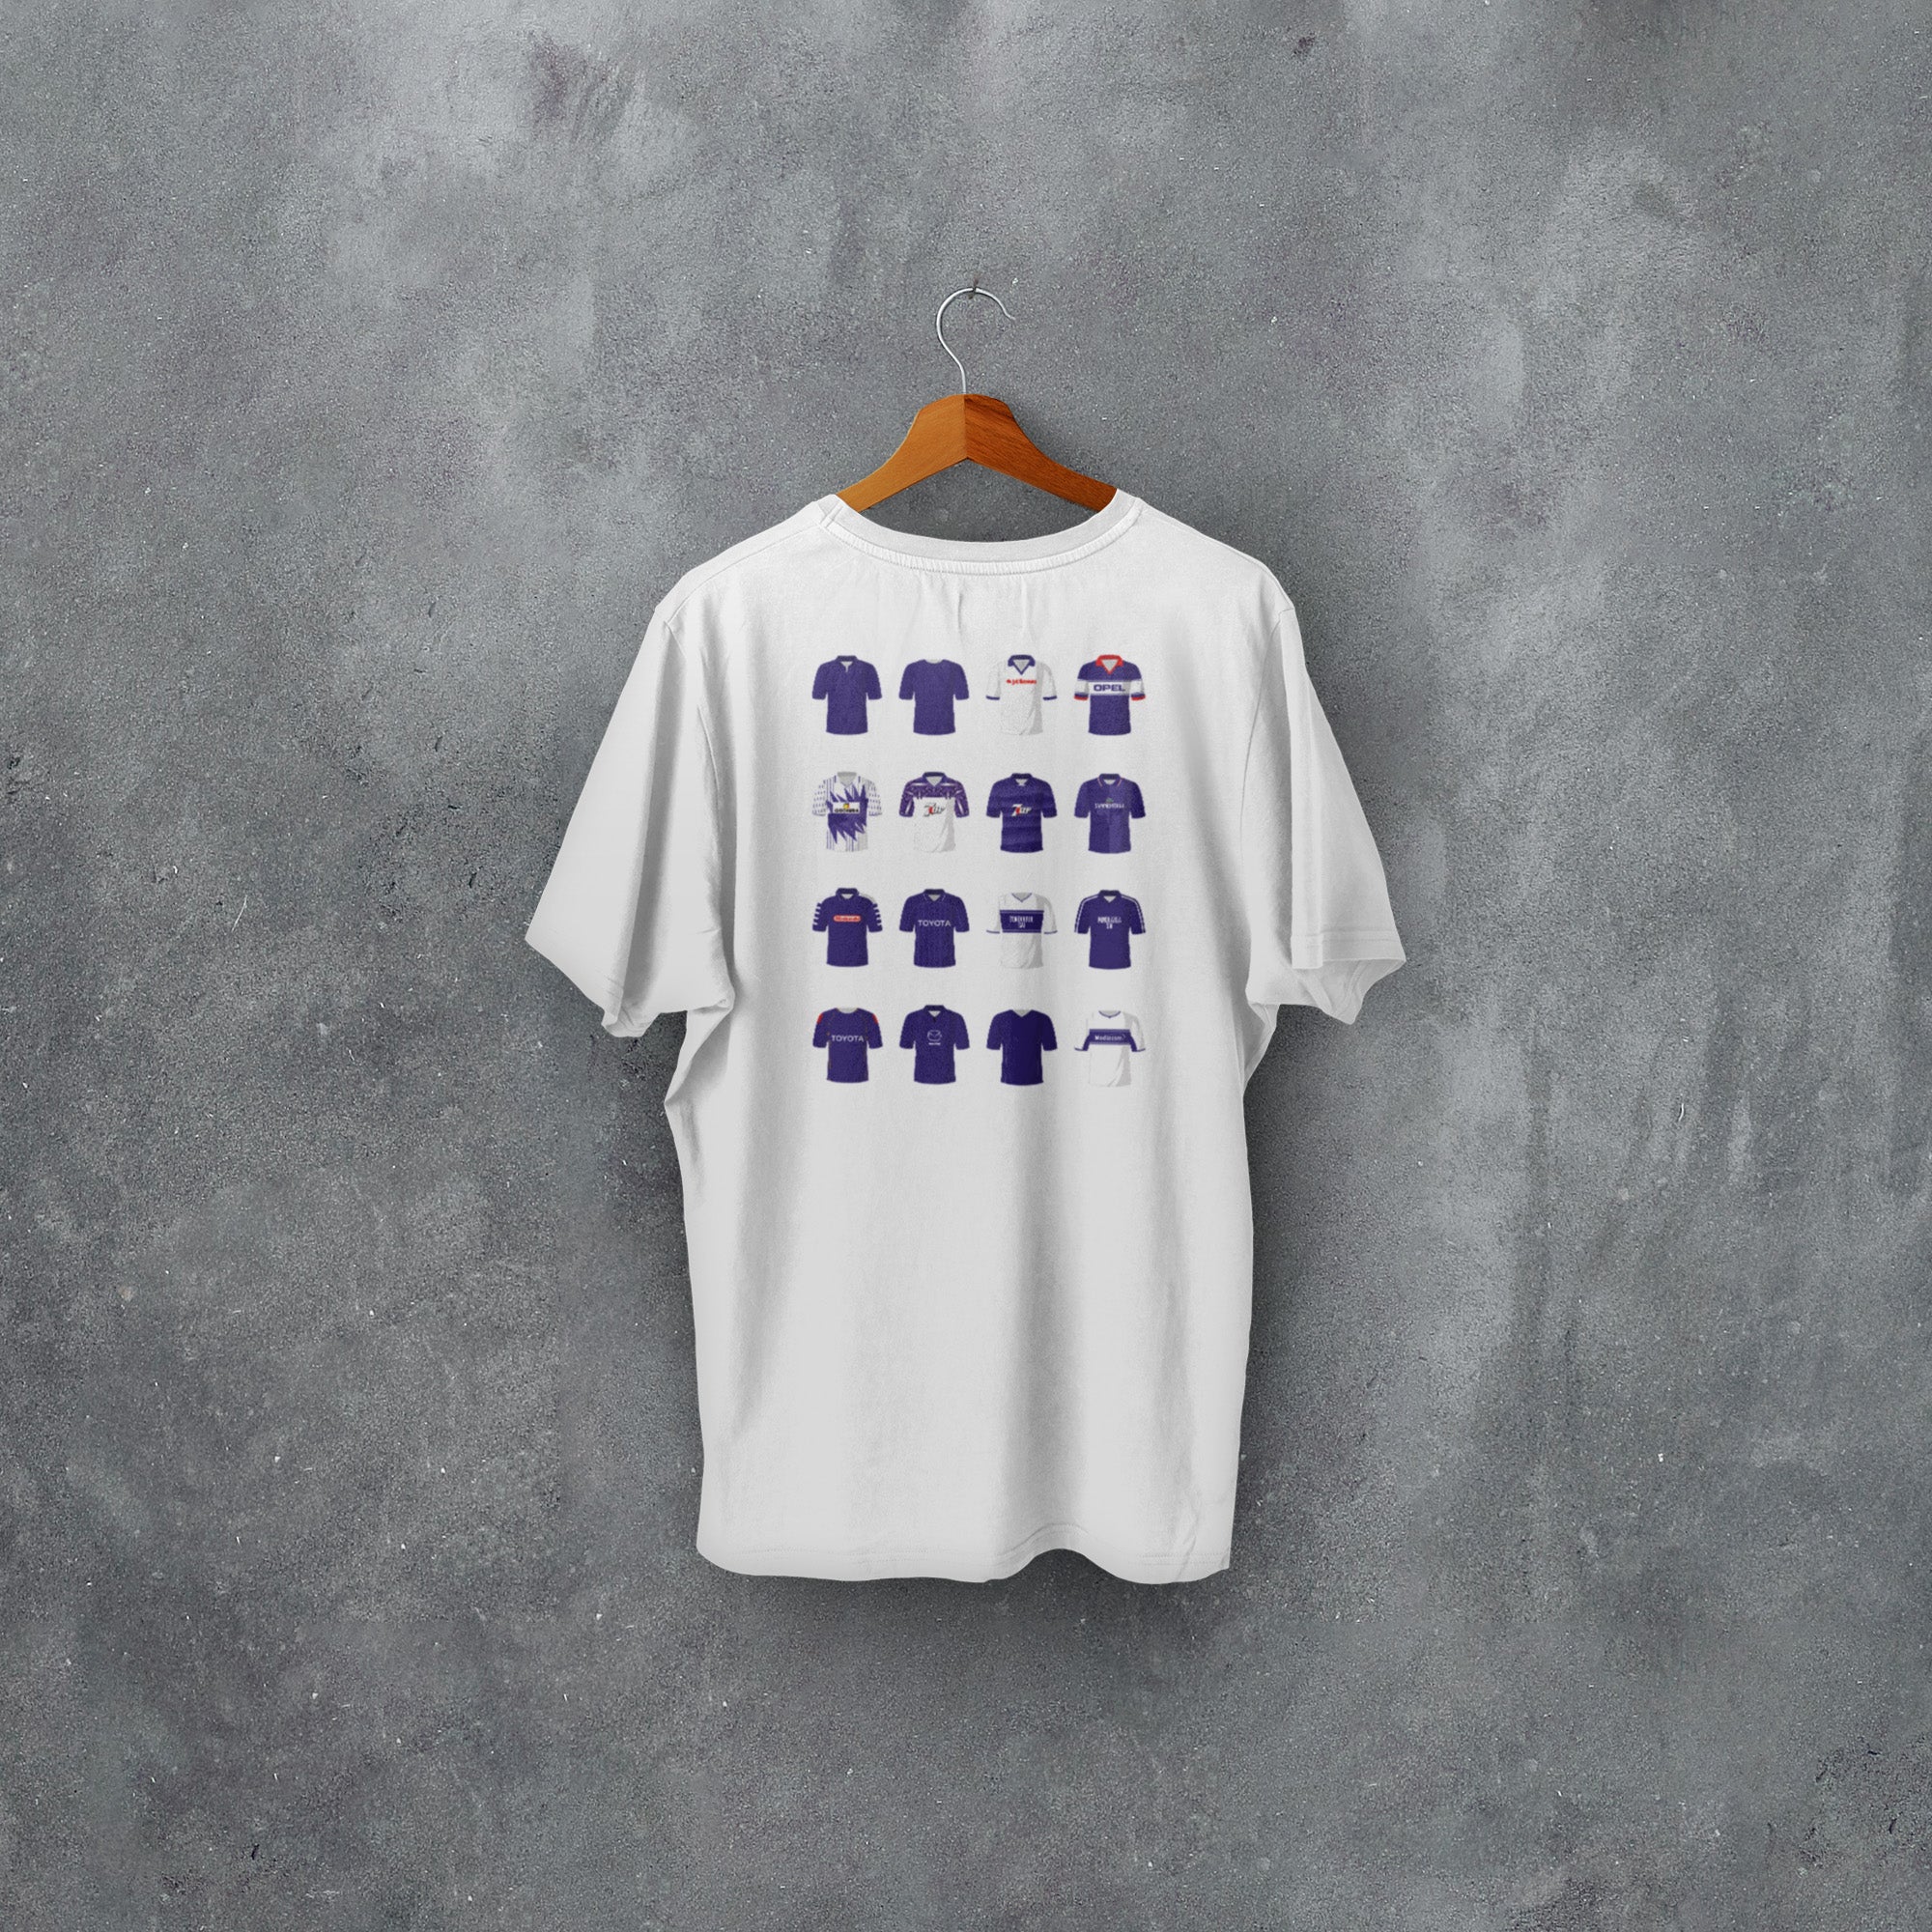 Fiorentina Classic Kits Football T-Shirt